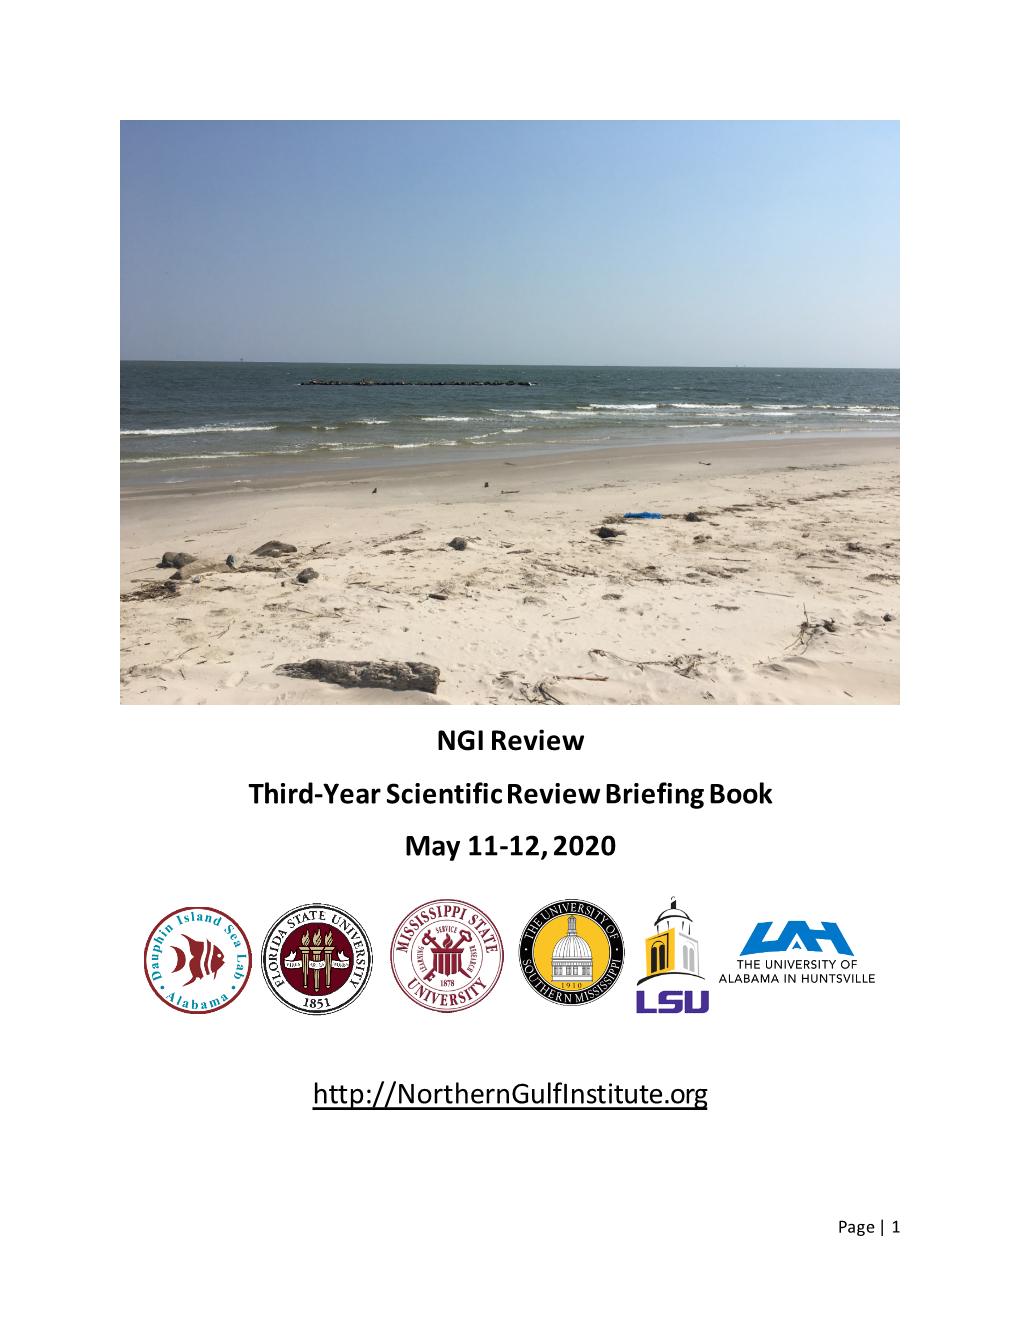 NGI Review Third-Year Scientific Review Briefing Book May 11-12, 2020